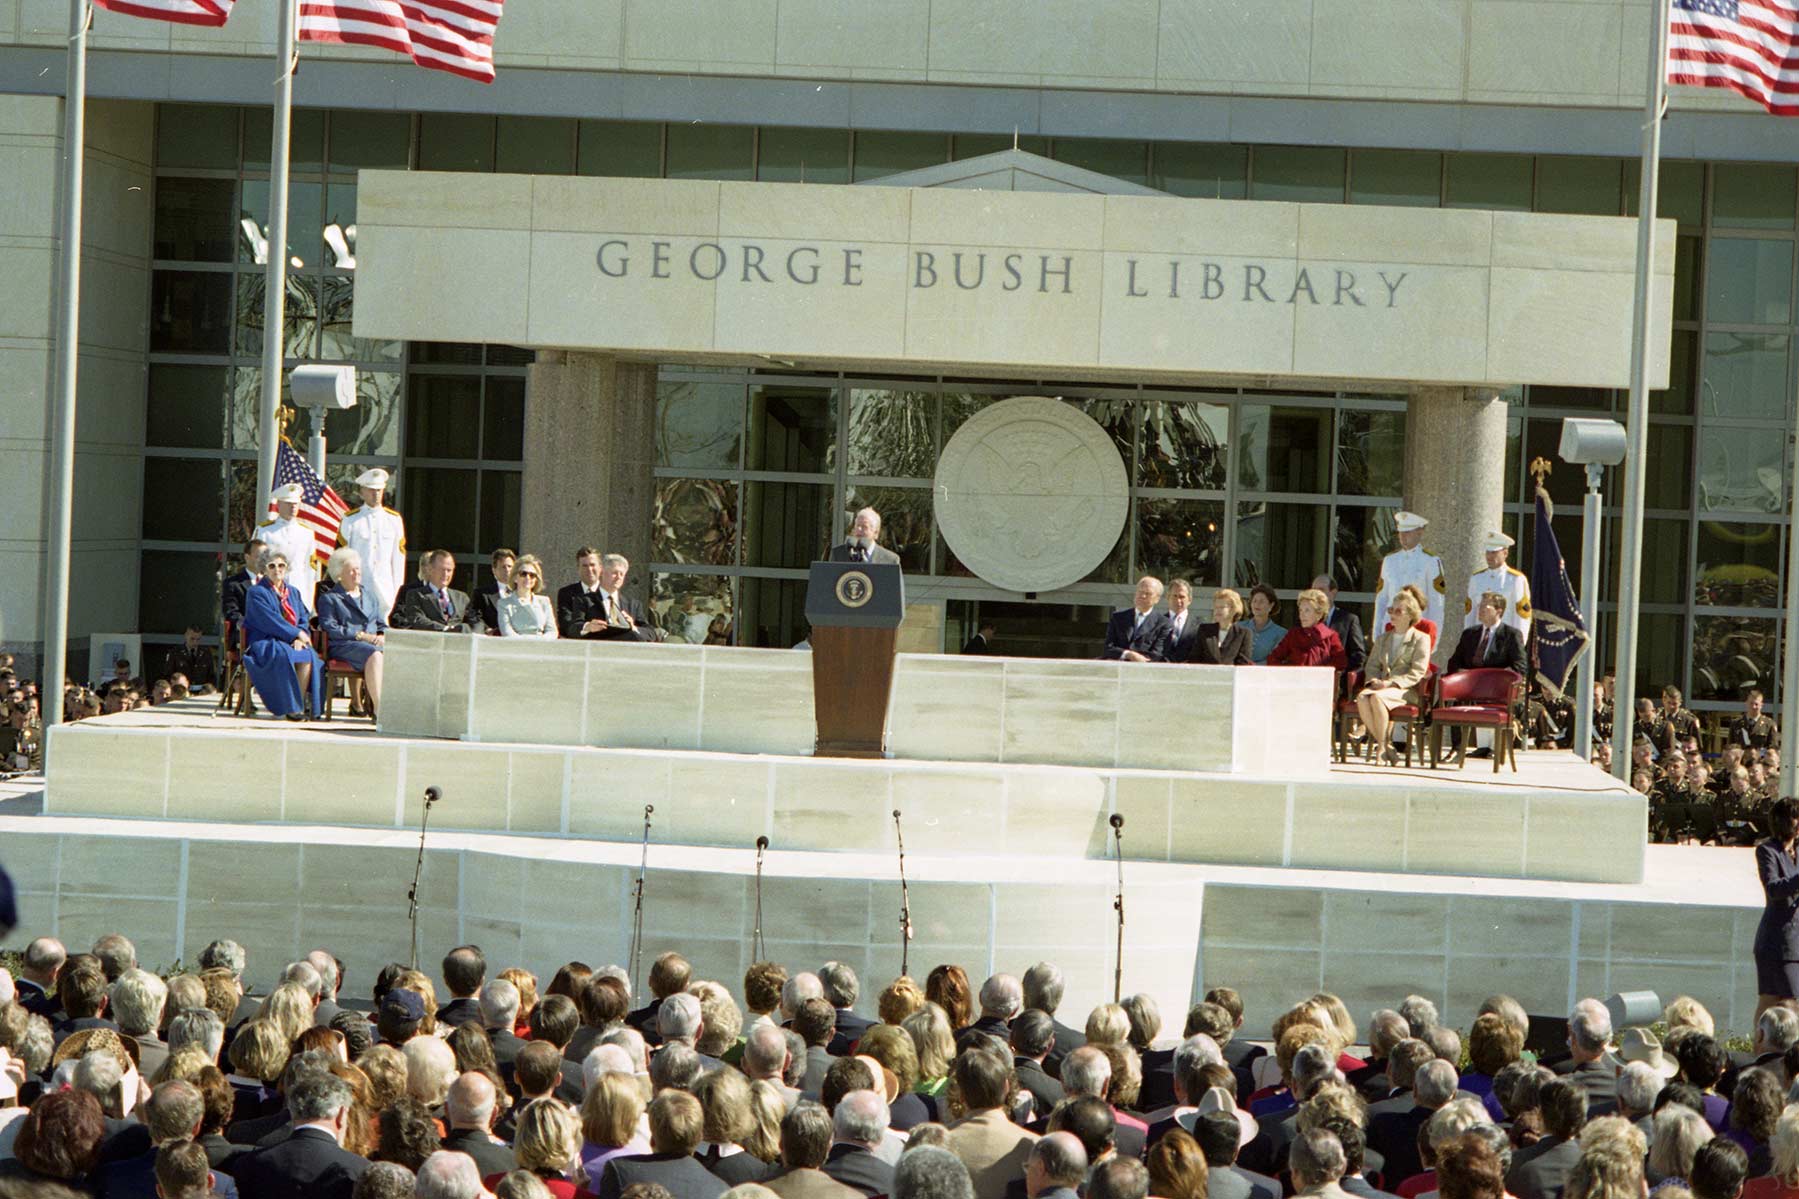 George Bush Library Dedication in 1997